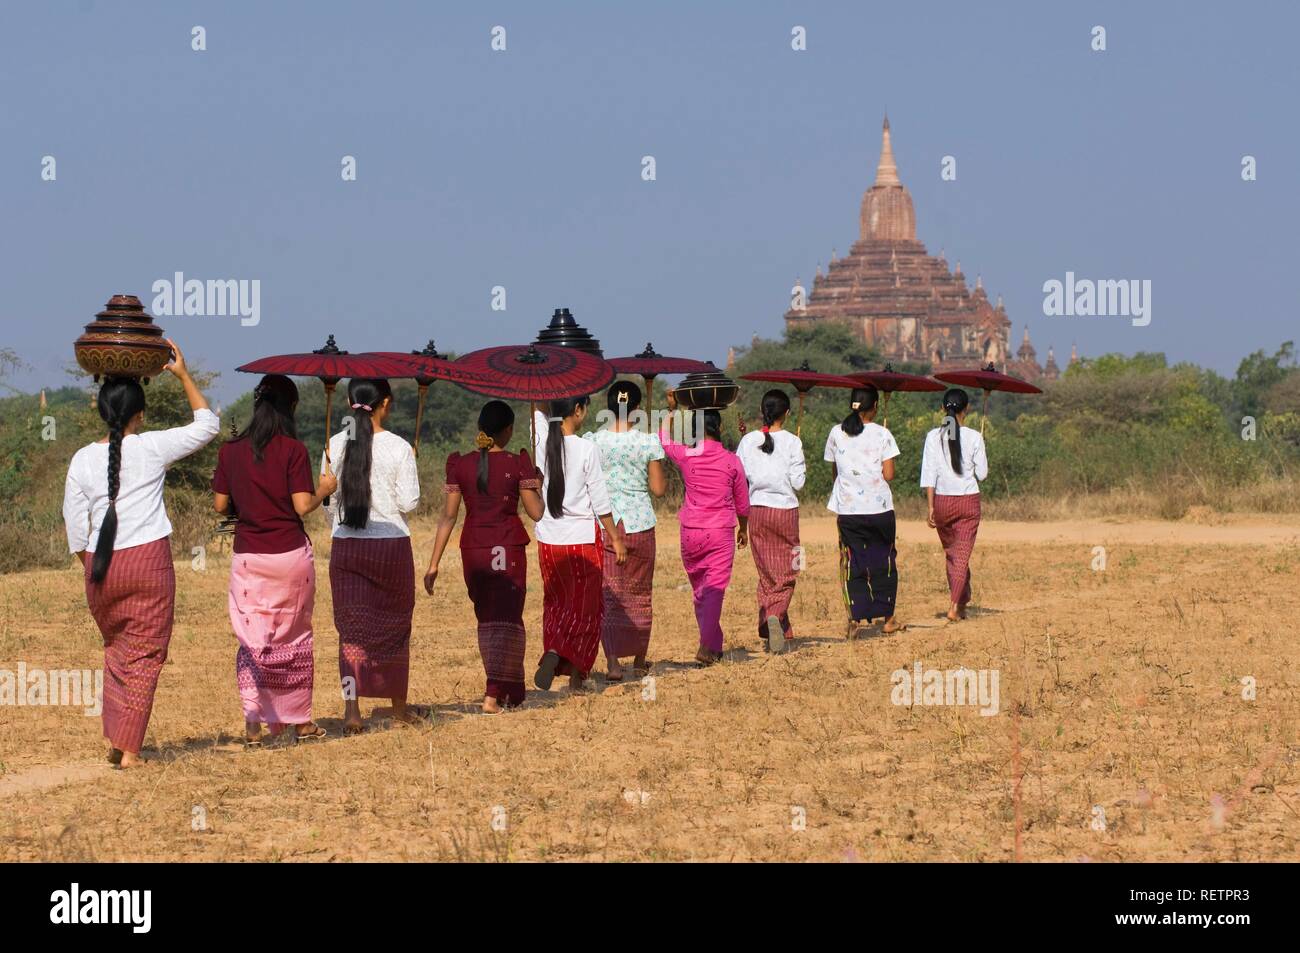 Young Burmese women with a parasol crossing a field near the Sulamani Pagoda, Bagan, Myanmar Stock Photo